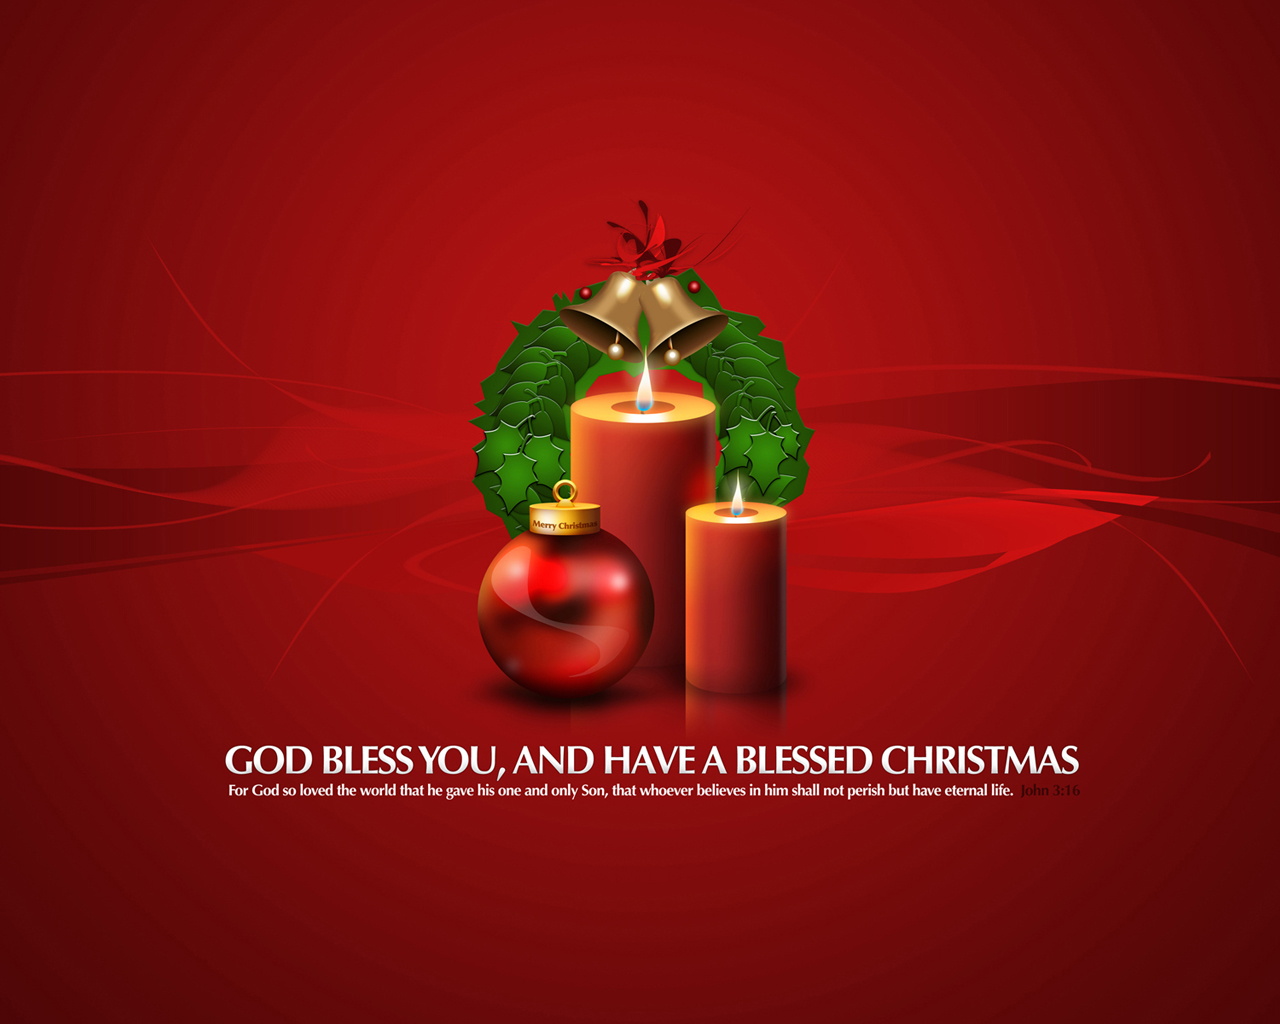 http://3.bp.blogspot.com/-td60Ajf9In8/TvchAmhjJVI/AAAAAAAALLE/PgF5tj0Cuuc/s1600/Blessed-Christmas.jpg